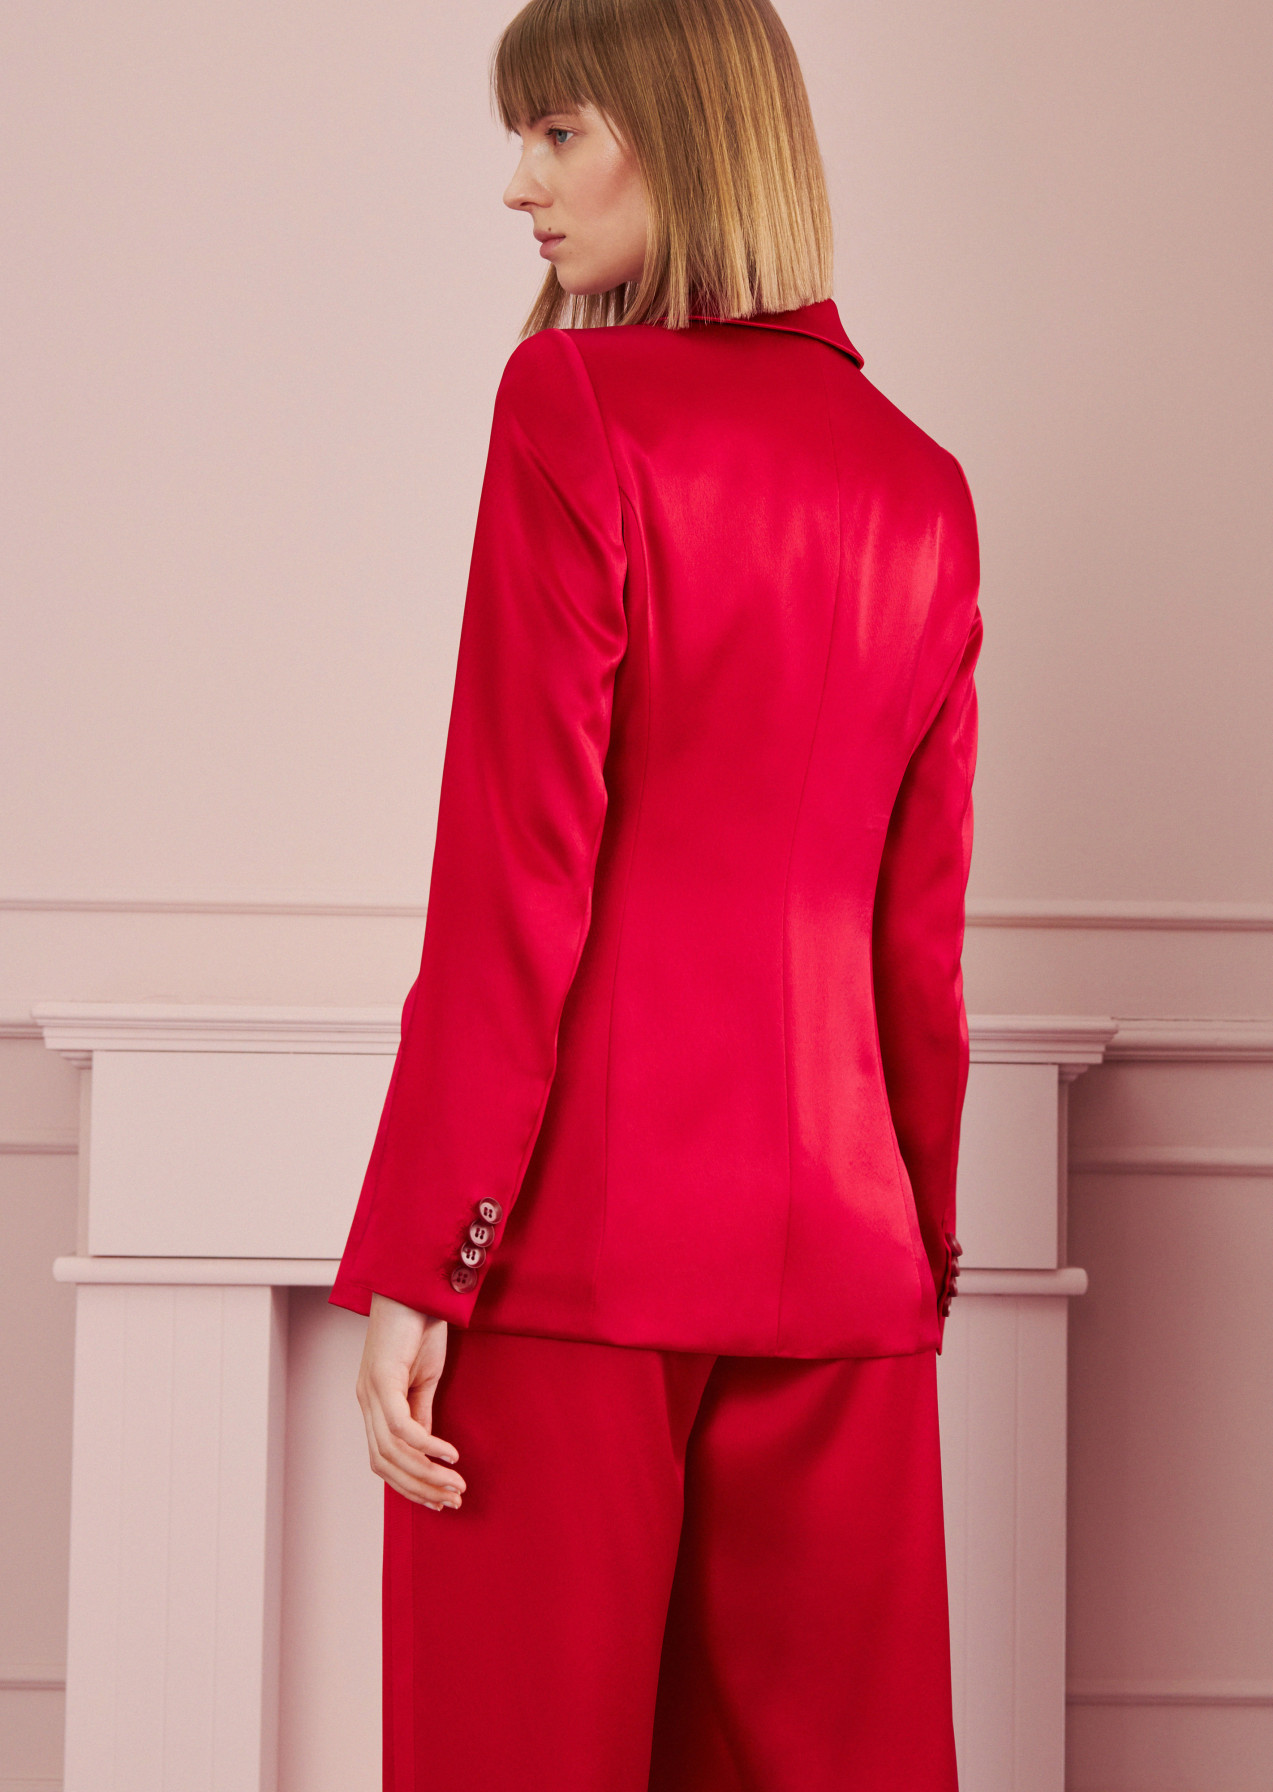 Women's Plus Size Talbot Red Blazer